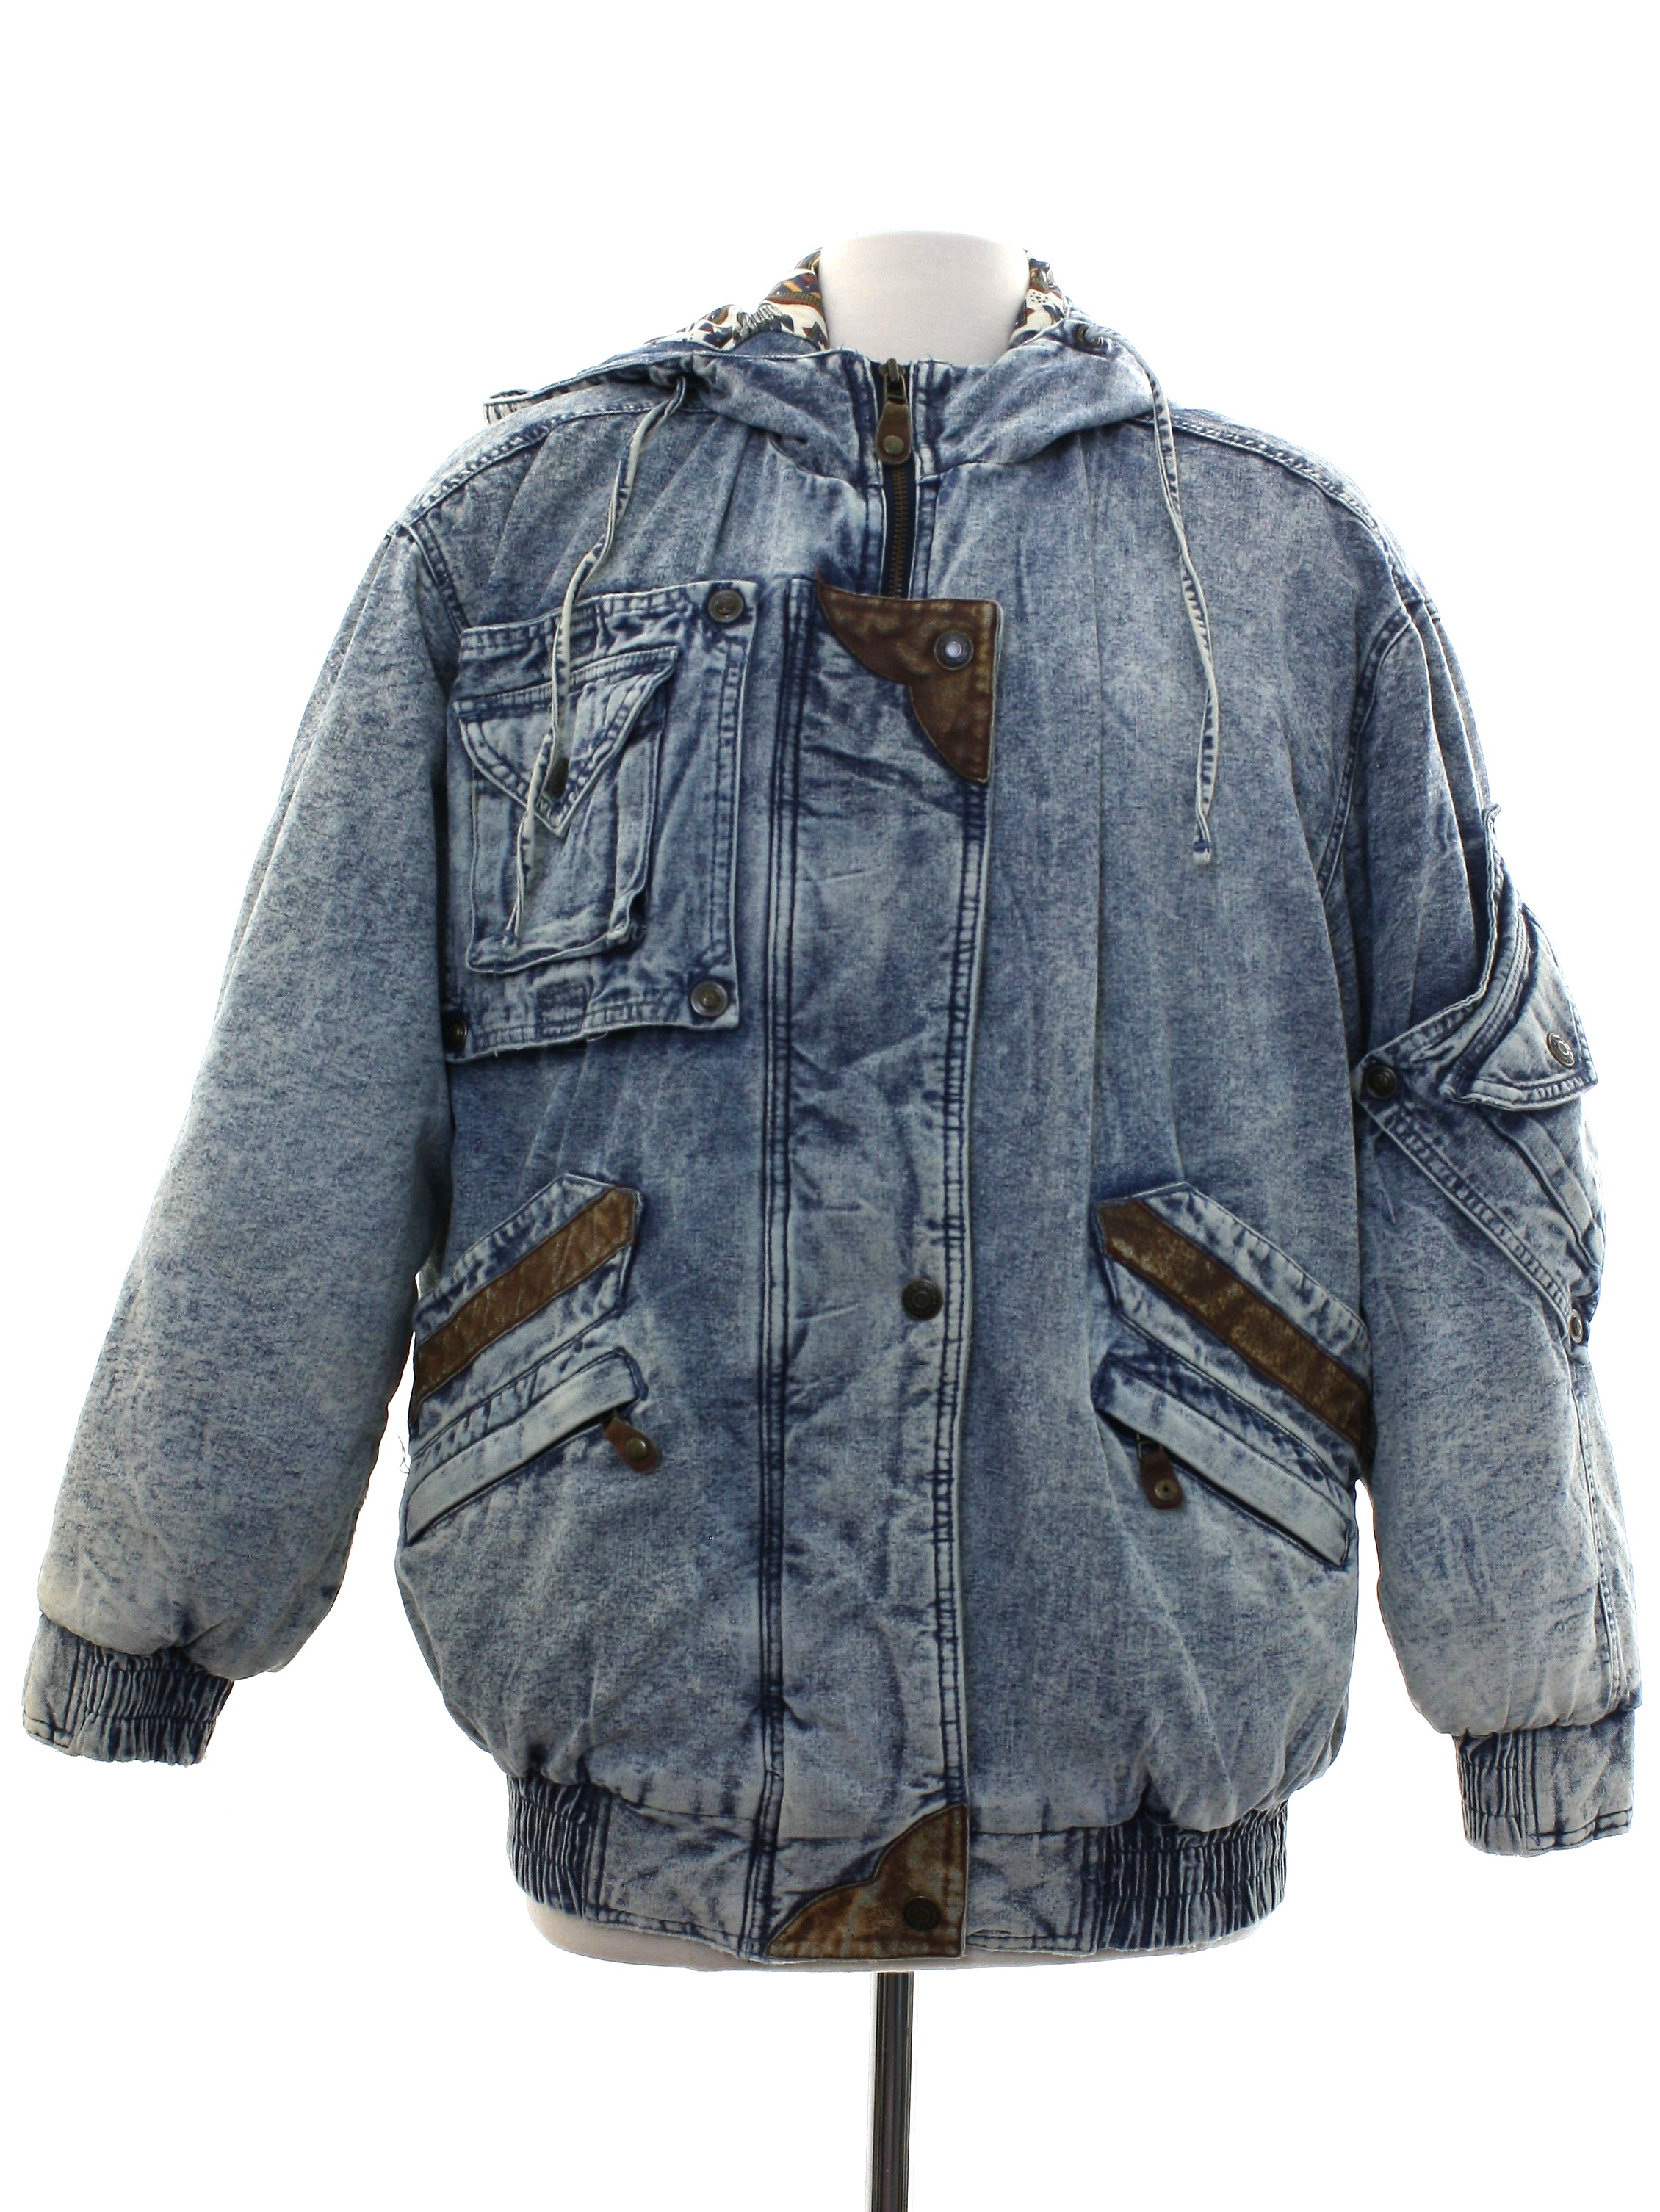 80s style denim jacket